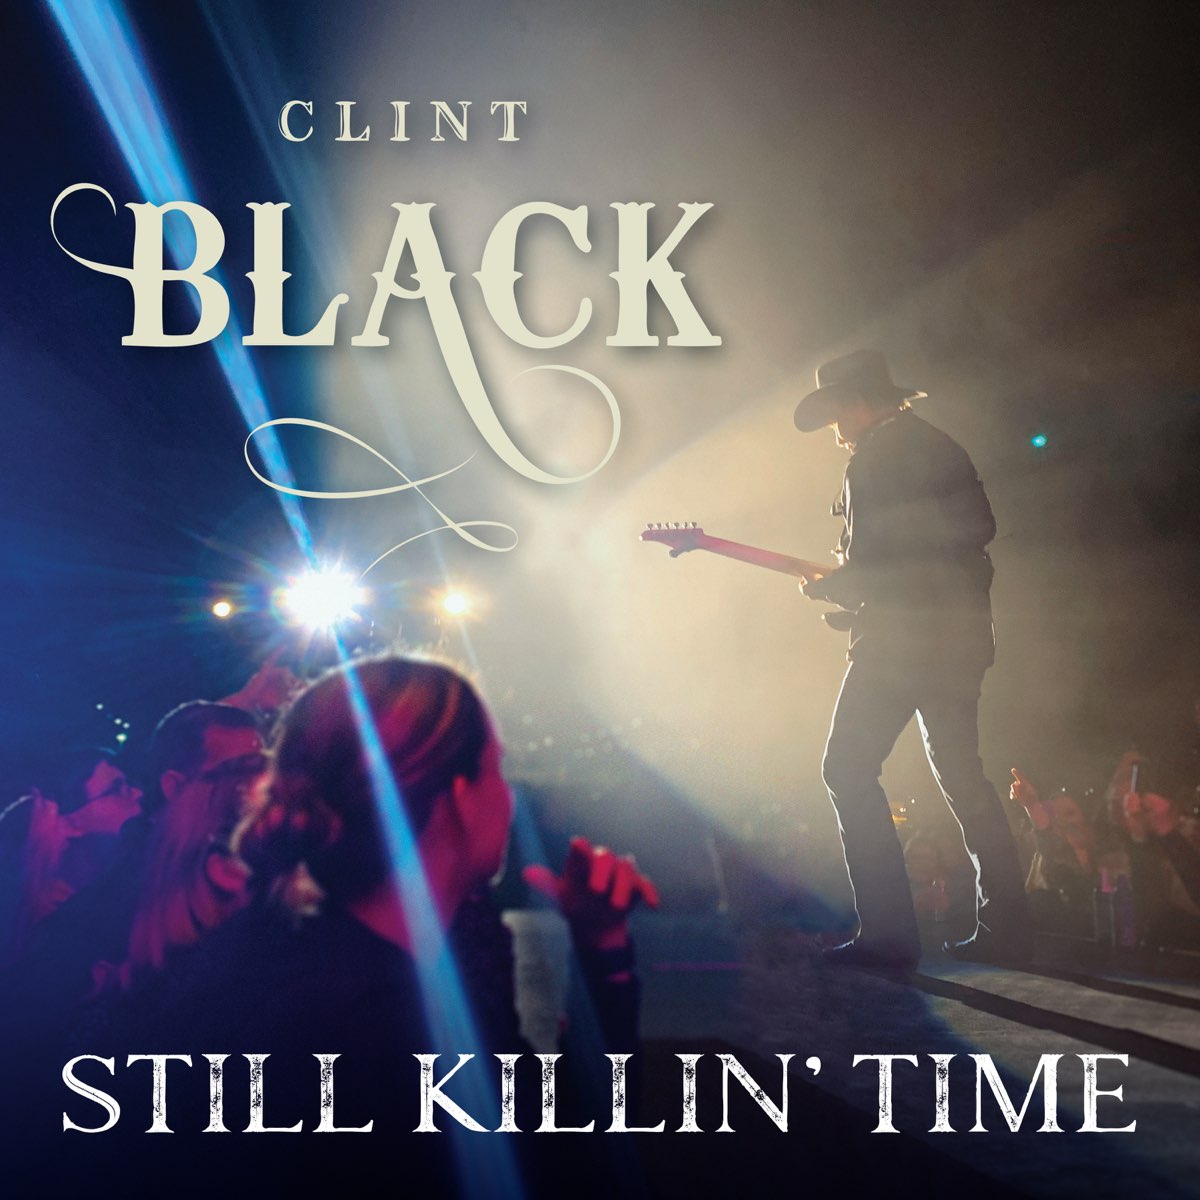 ‎Still Killin' Time by Clint Black on Apple Music